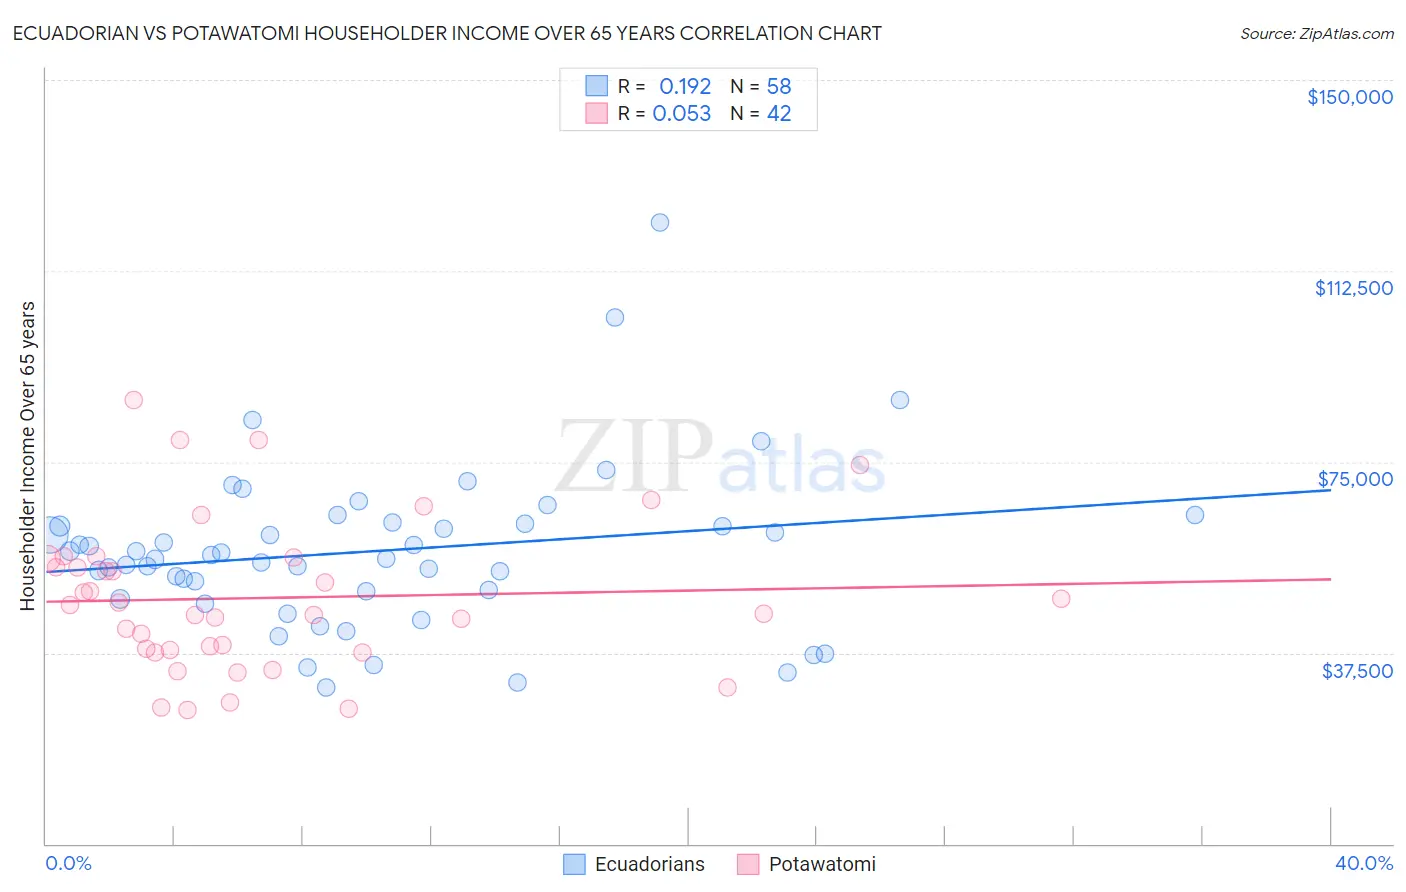 Ecuadorian vs Potawatomi Householder Income Over 65 years